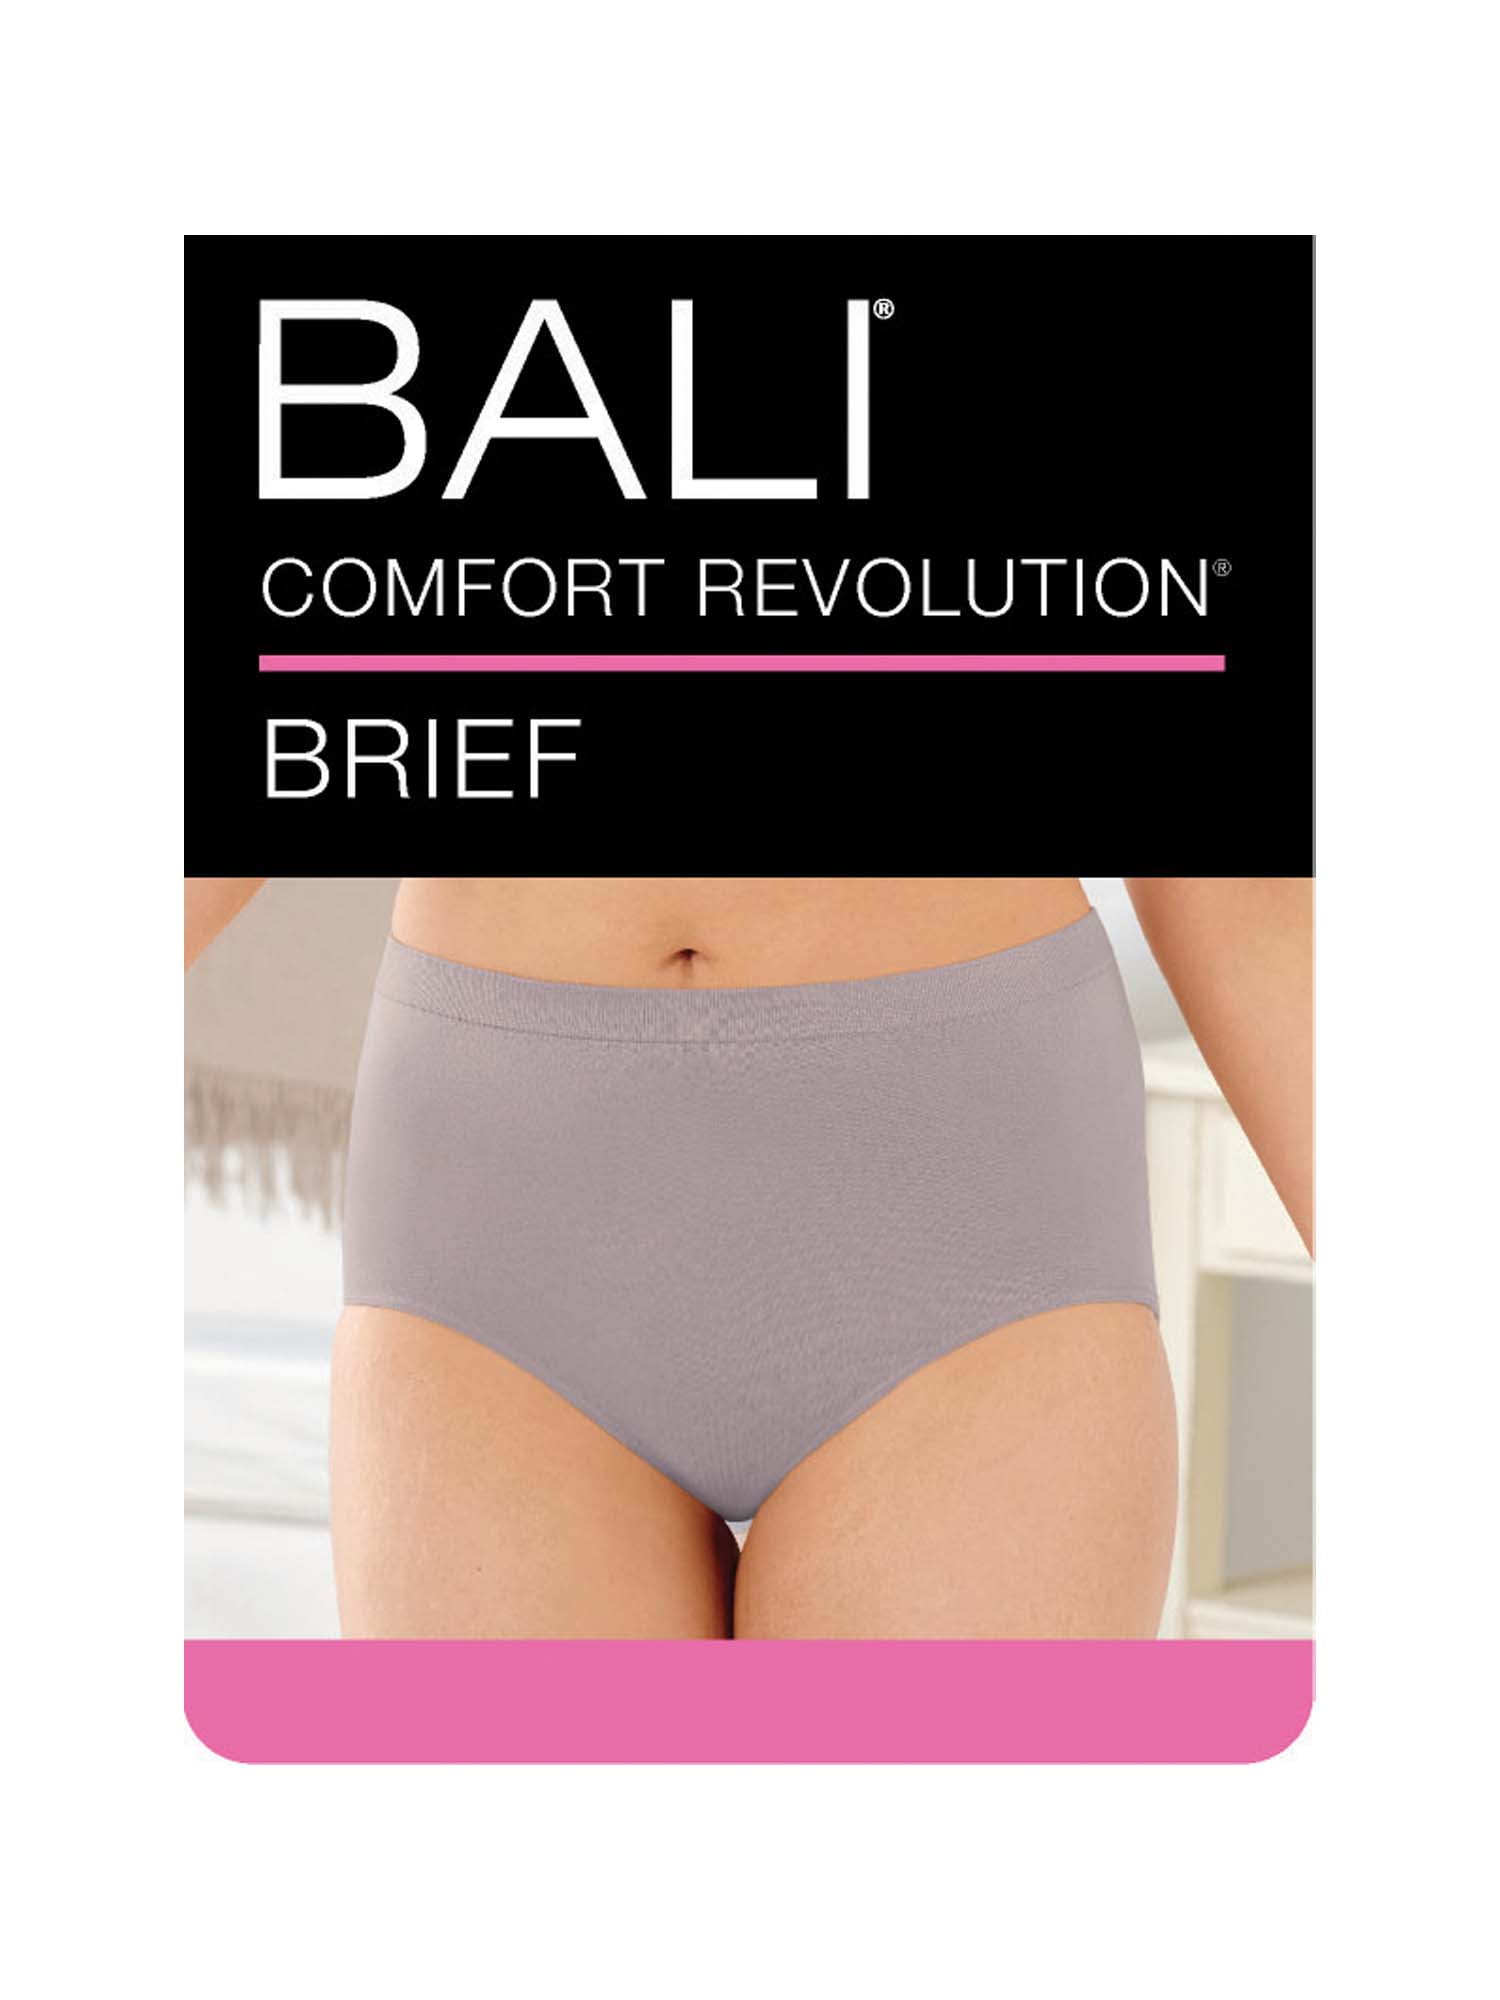 Bali Women's Comfort Revolution Brief Panty (3-Pack) (6-7, Light